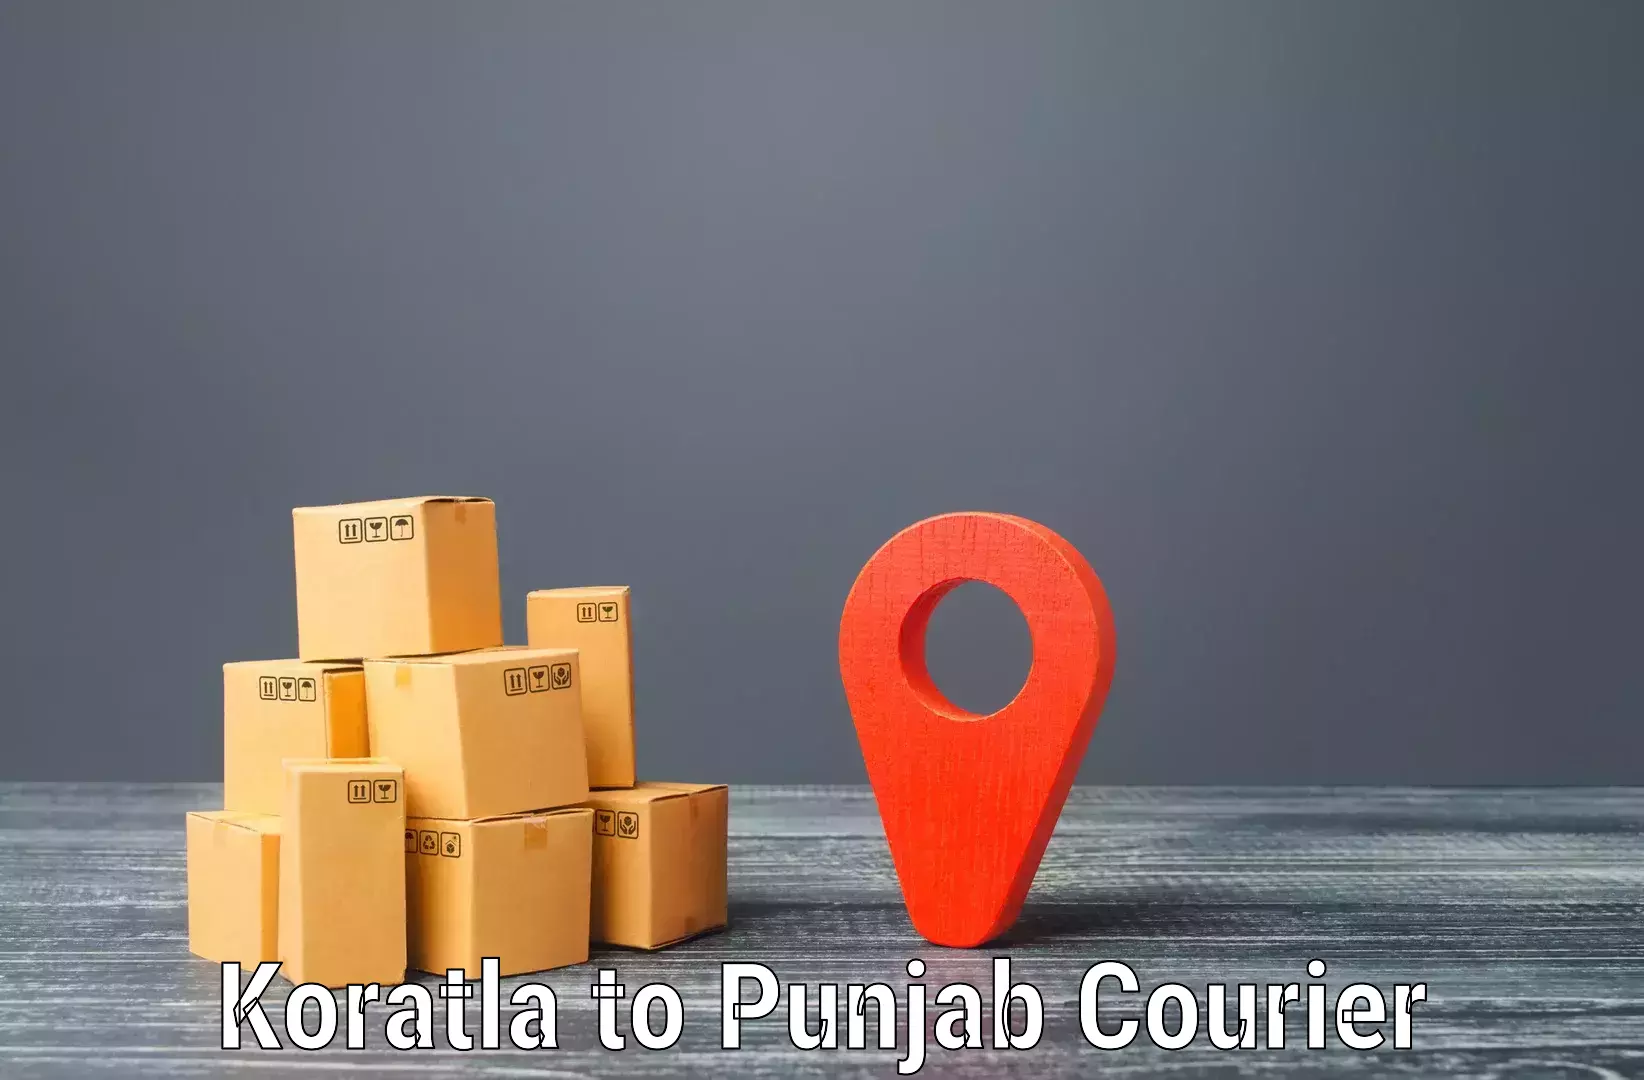 Comprehensive shipping network Koratla to Mohali